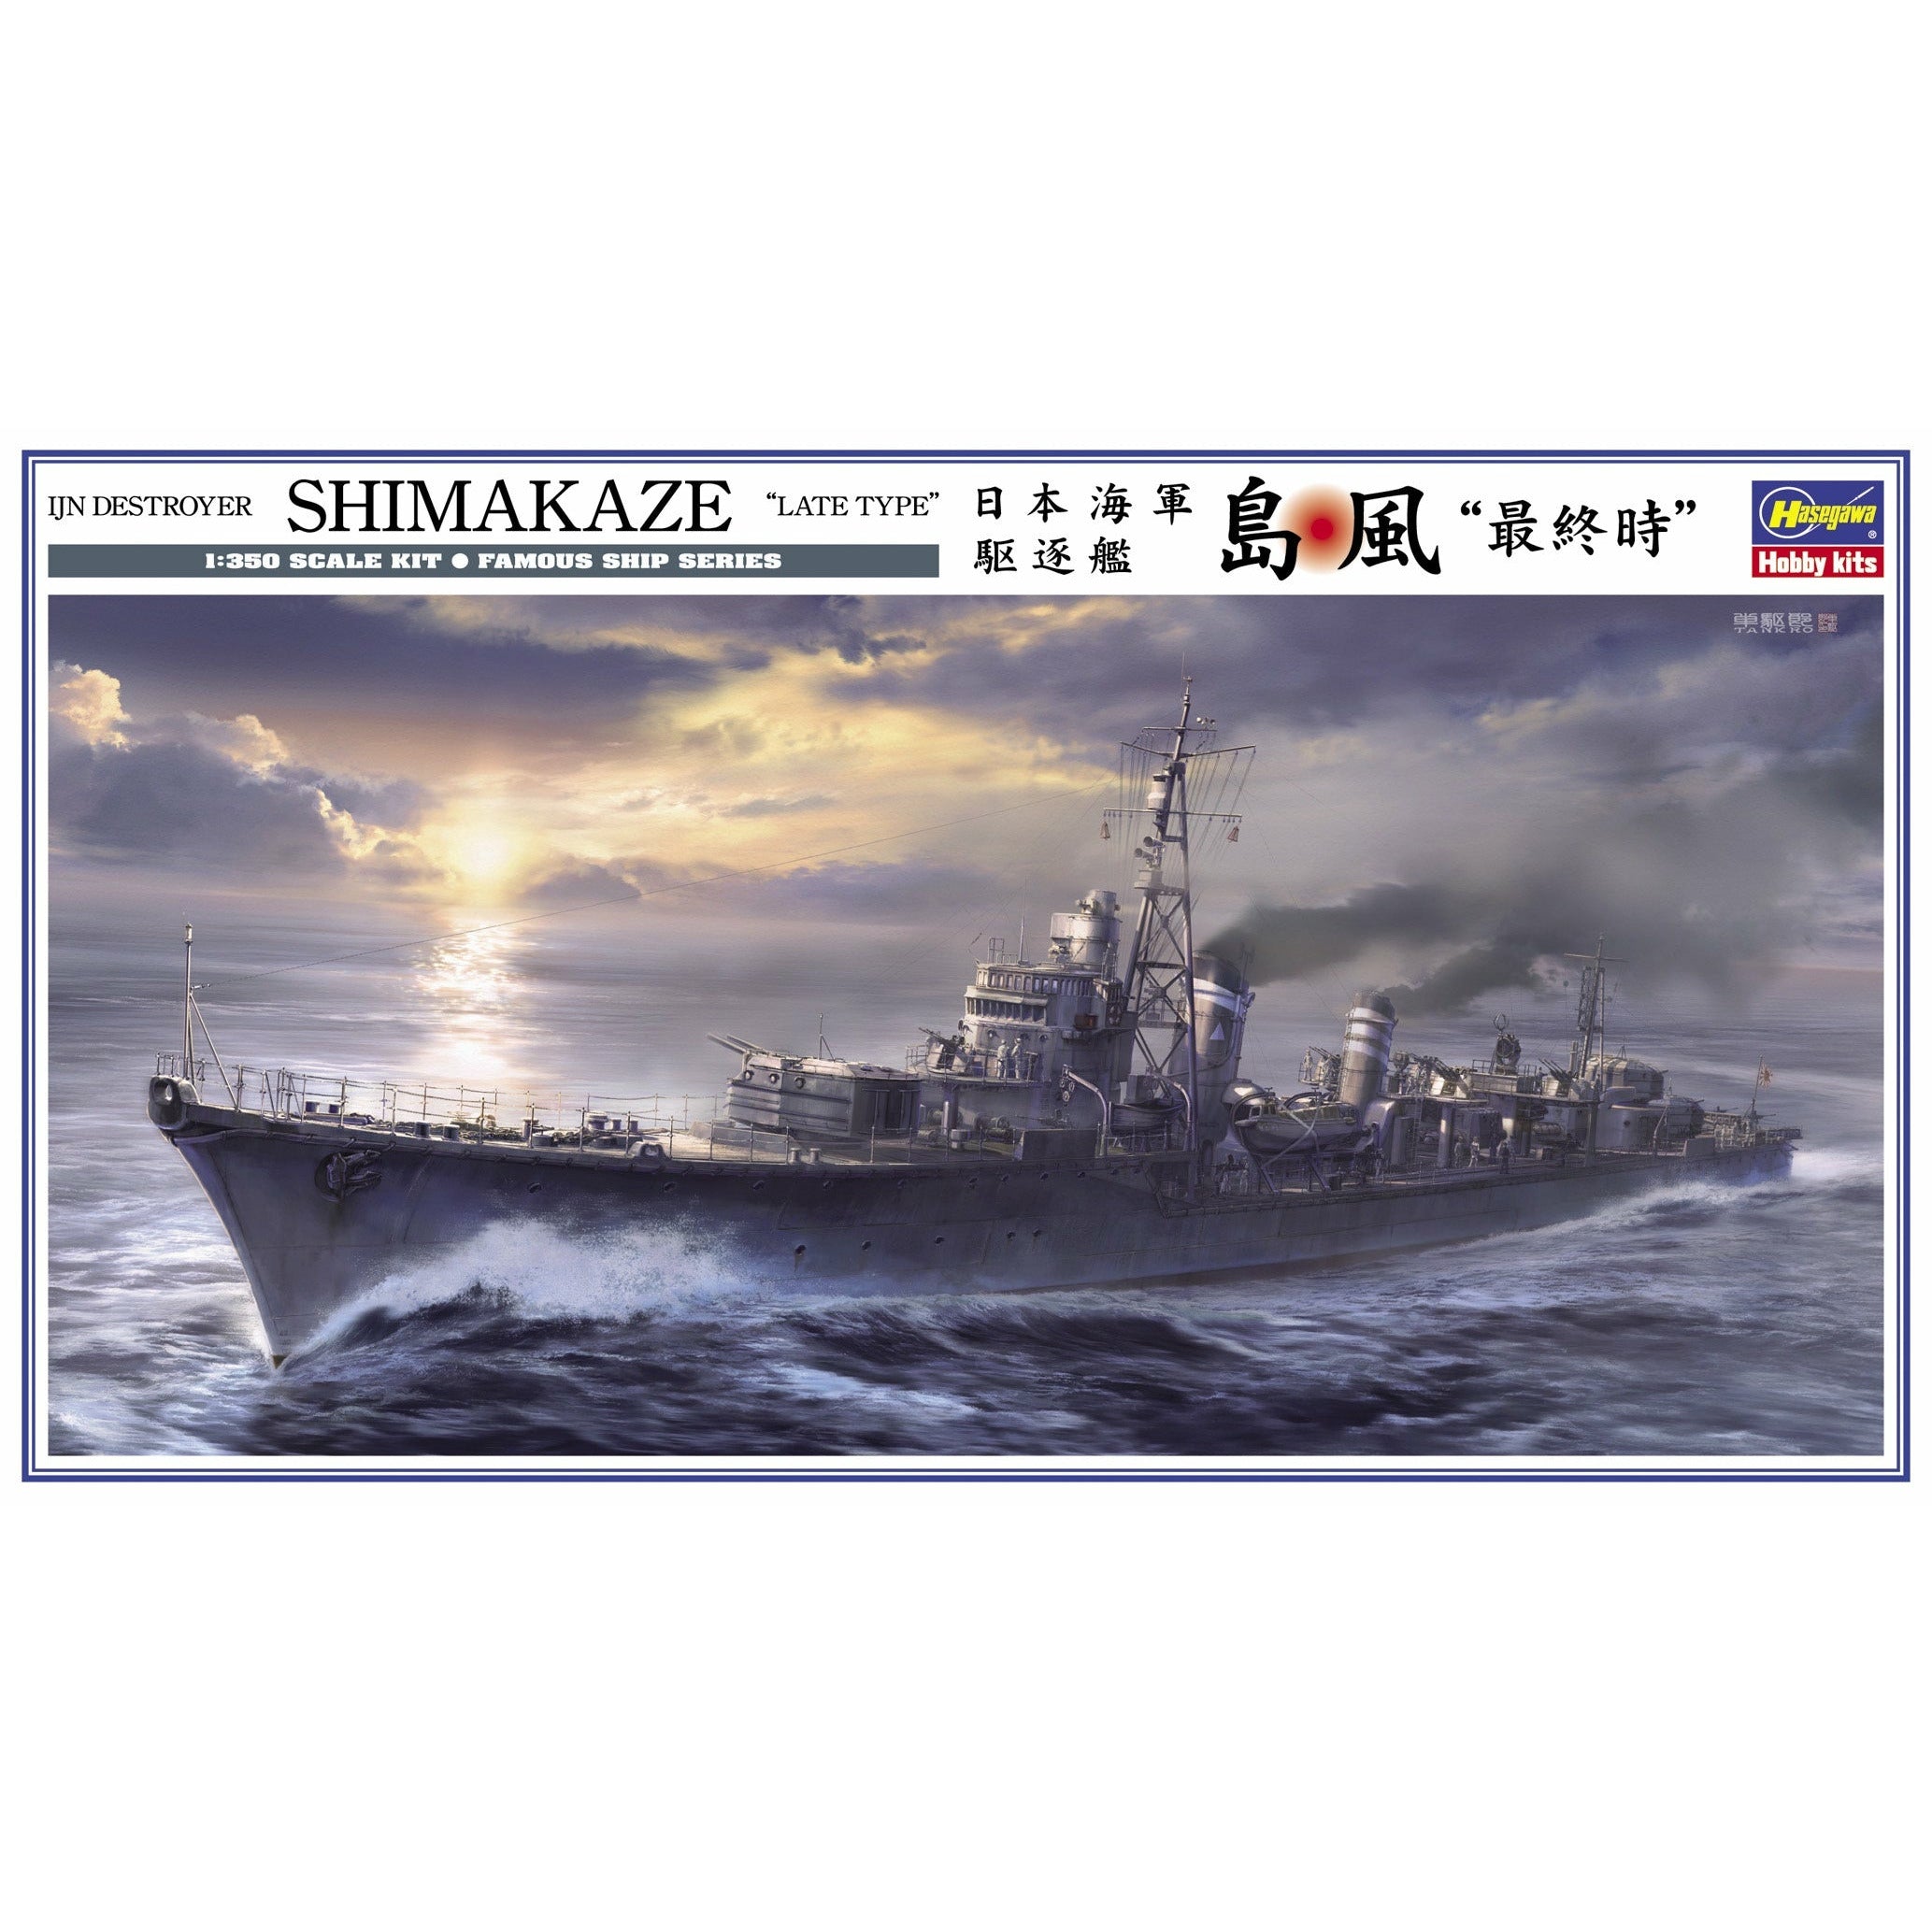 IJN Destroyer Shimakaze 'Late Type' 1/350 Model Ship Kit #40029 by Hasegawa